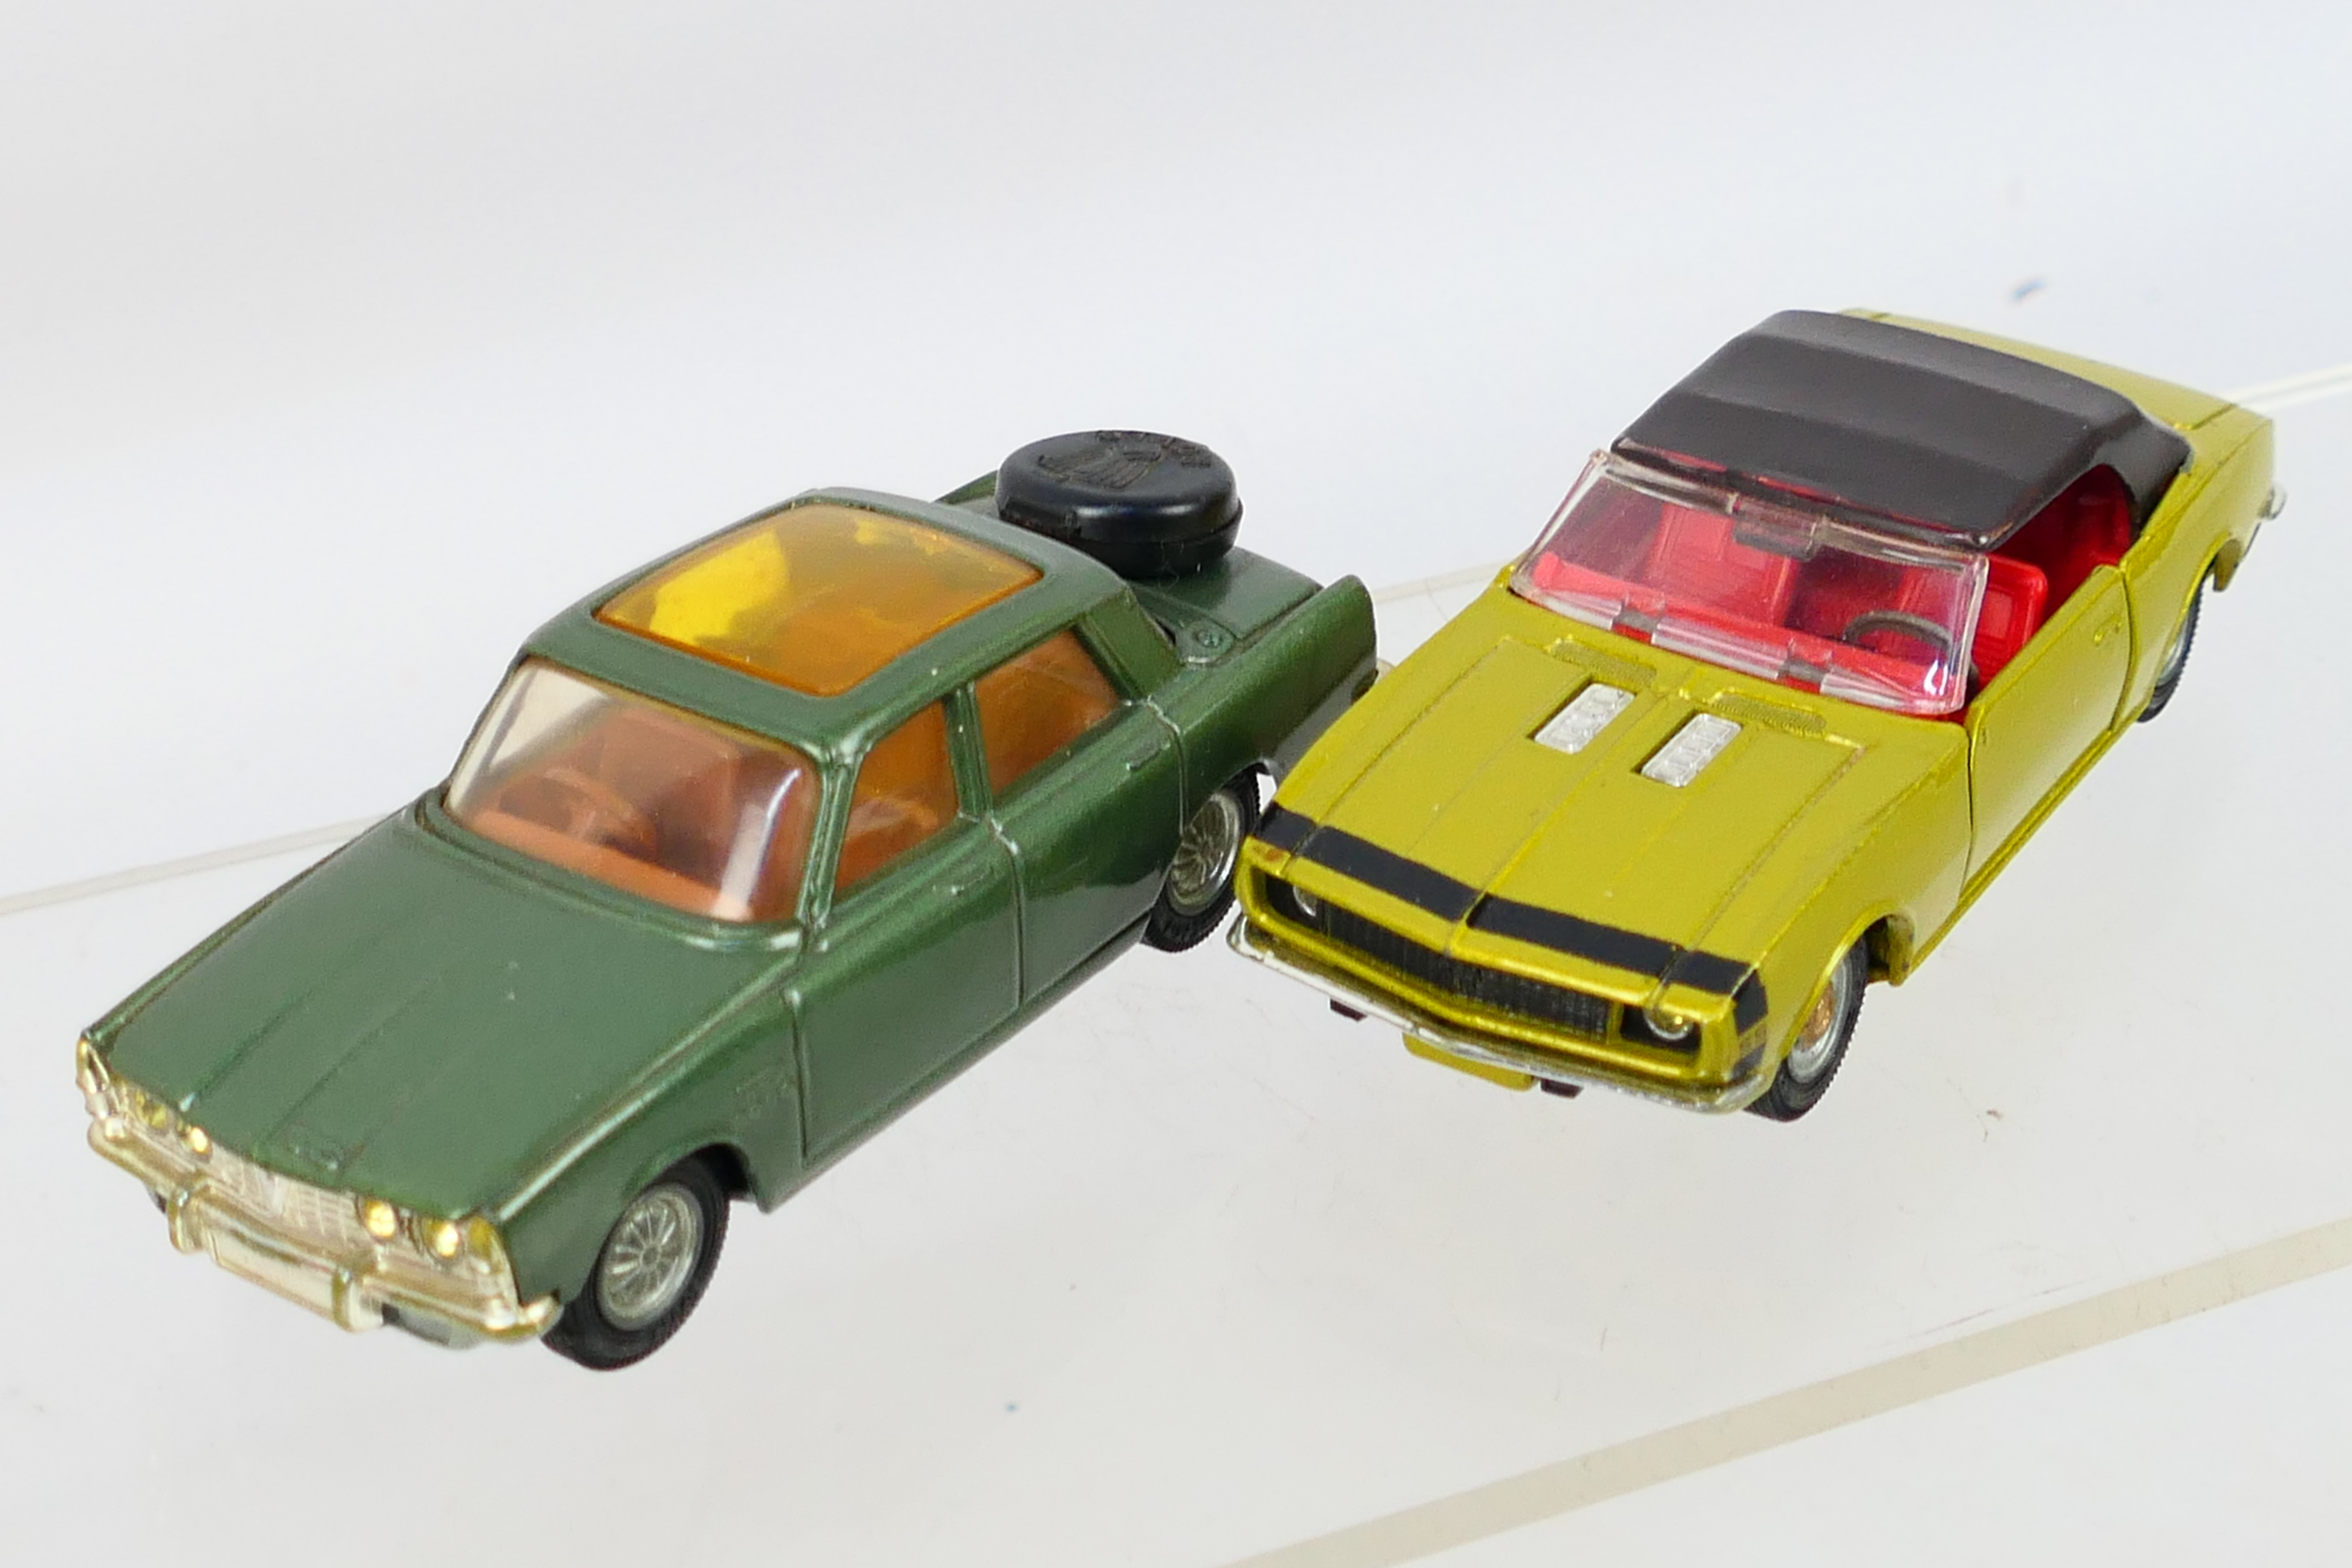 Corgi - Golden Jacks - 2 x boxed models Rover 2000 TC # 275 and Chevrolet Camaro SS # 338. - Image 5 of 8